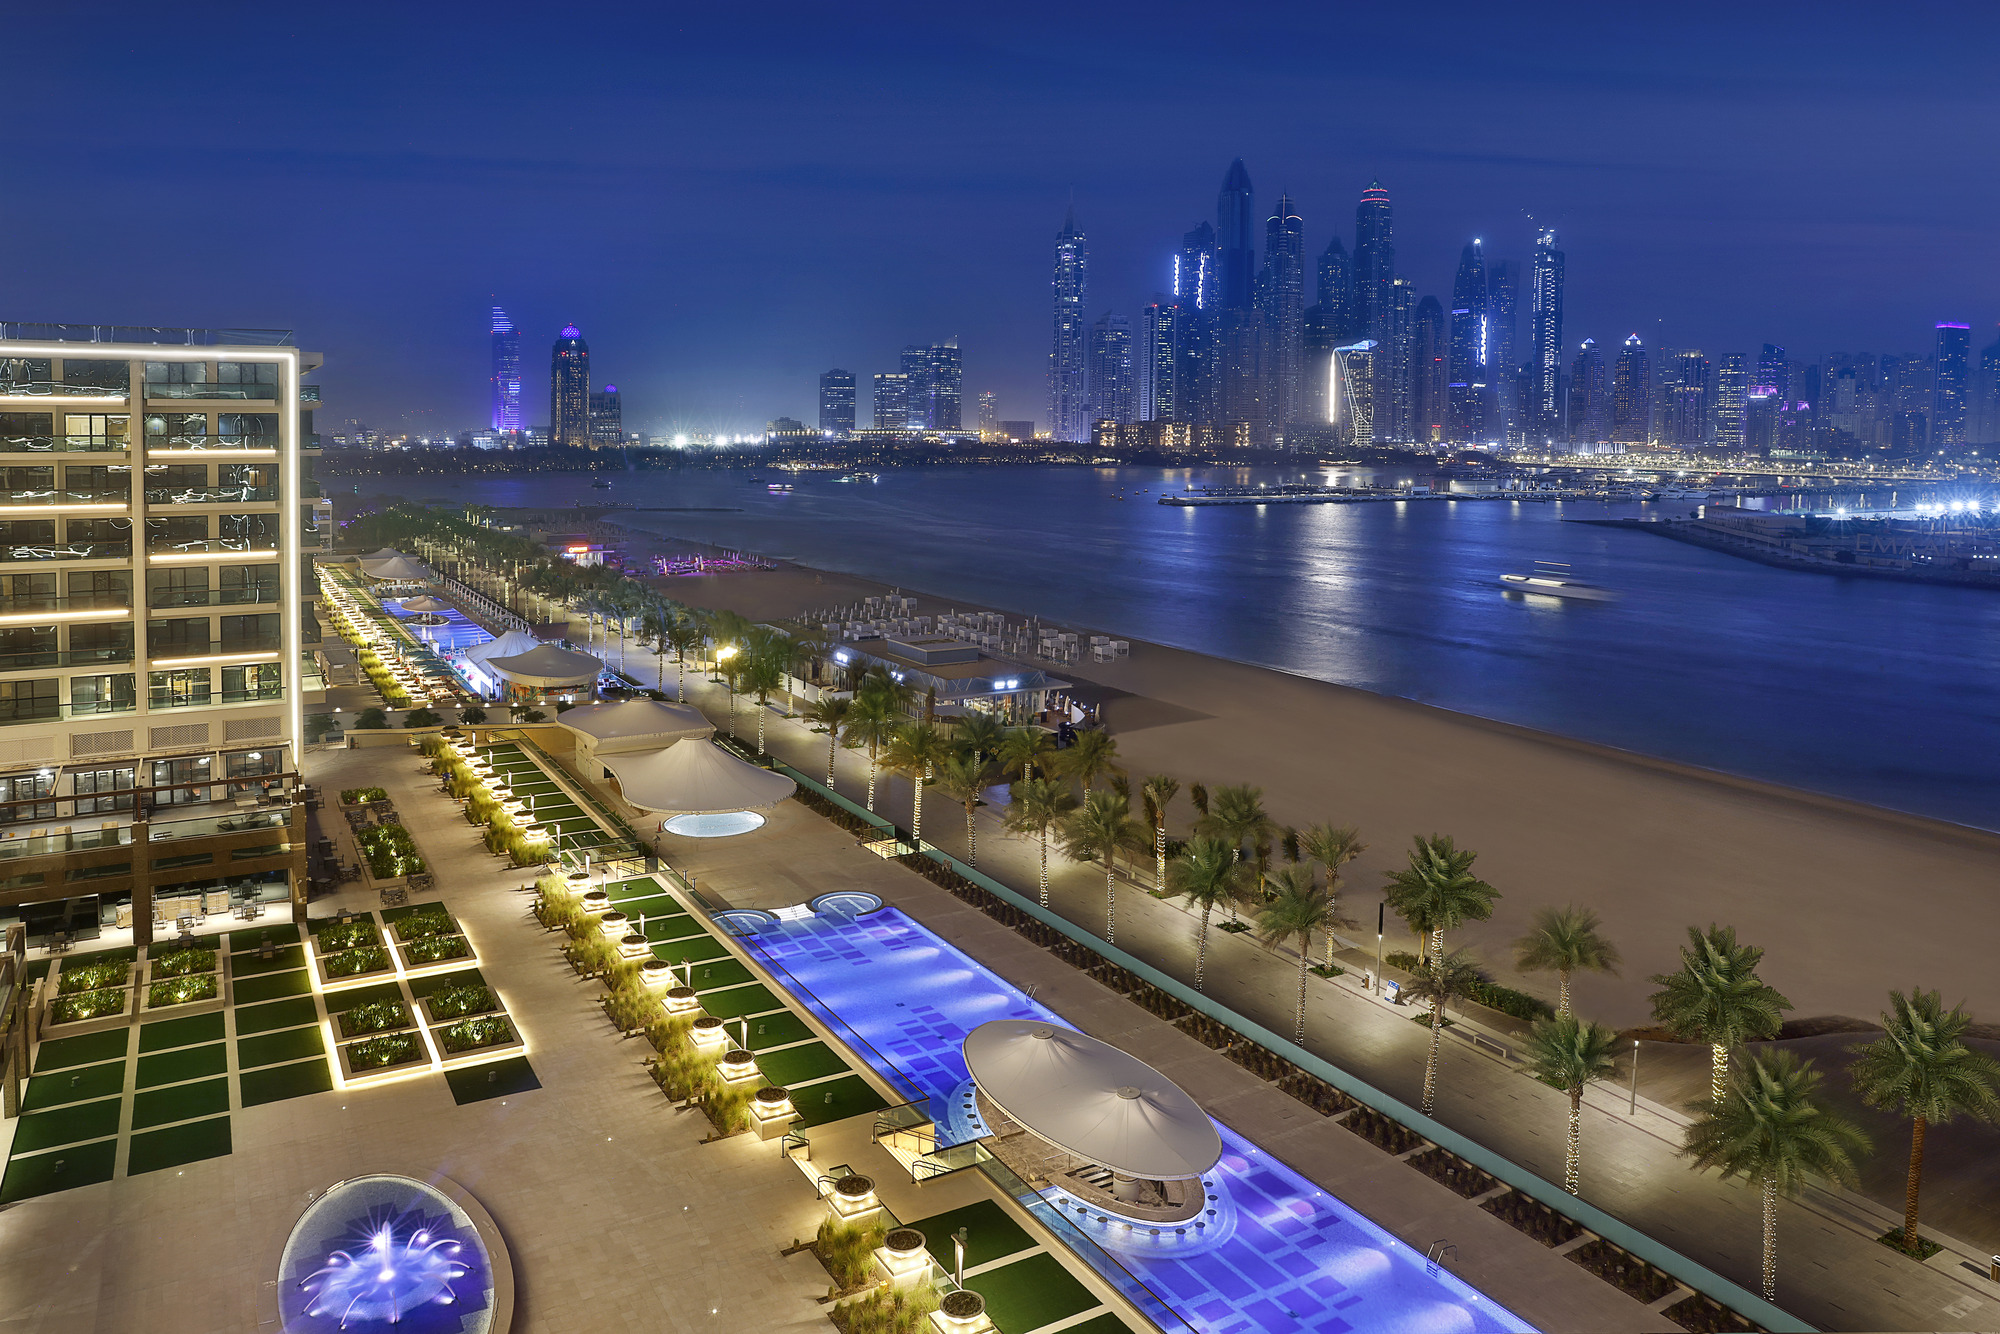  Night views of Dubai from Marriott Resort Palm Jumeirah, Dubai.